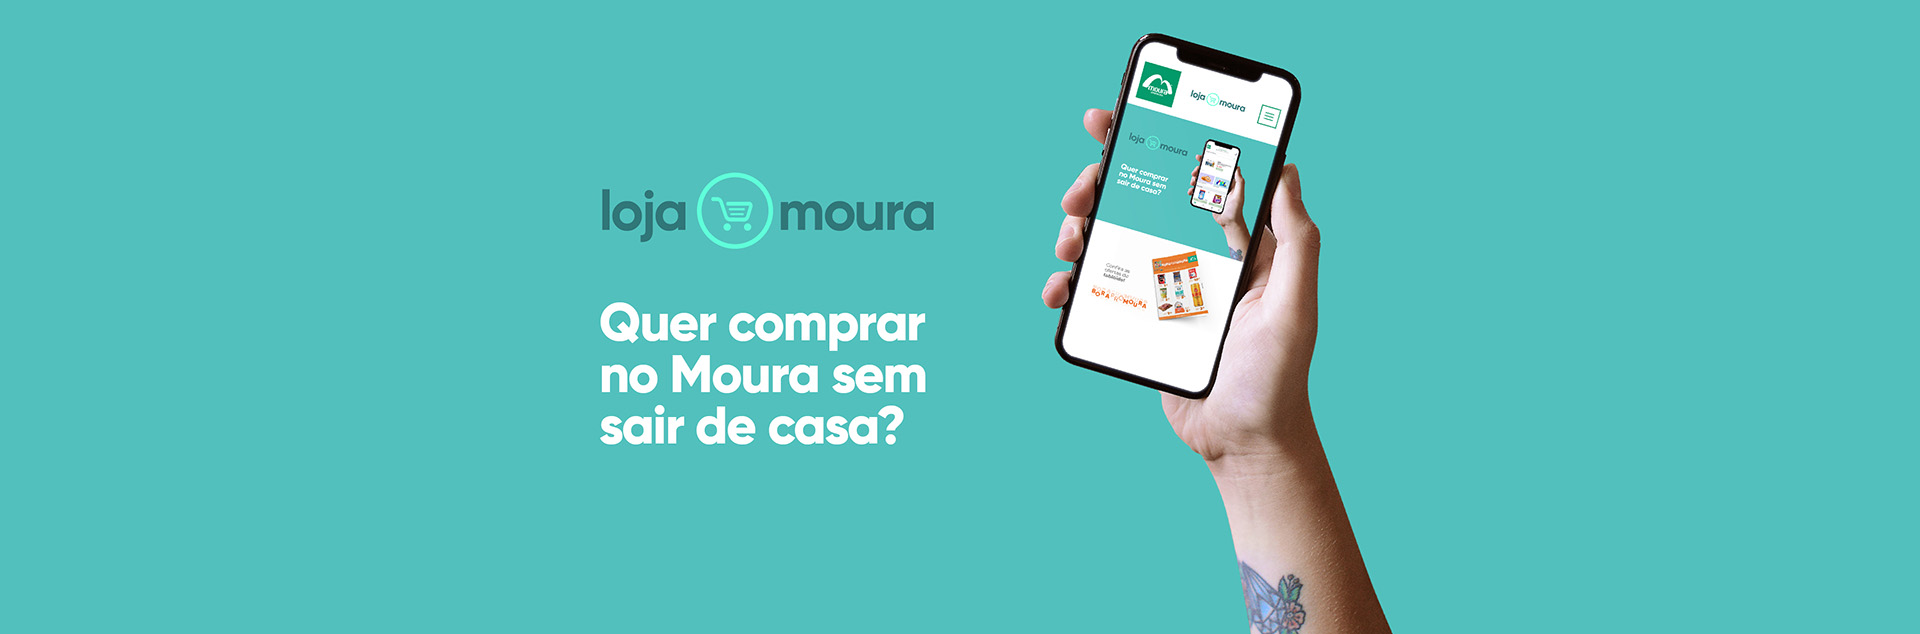 Loja Moura - 02